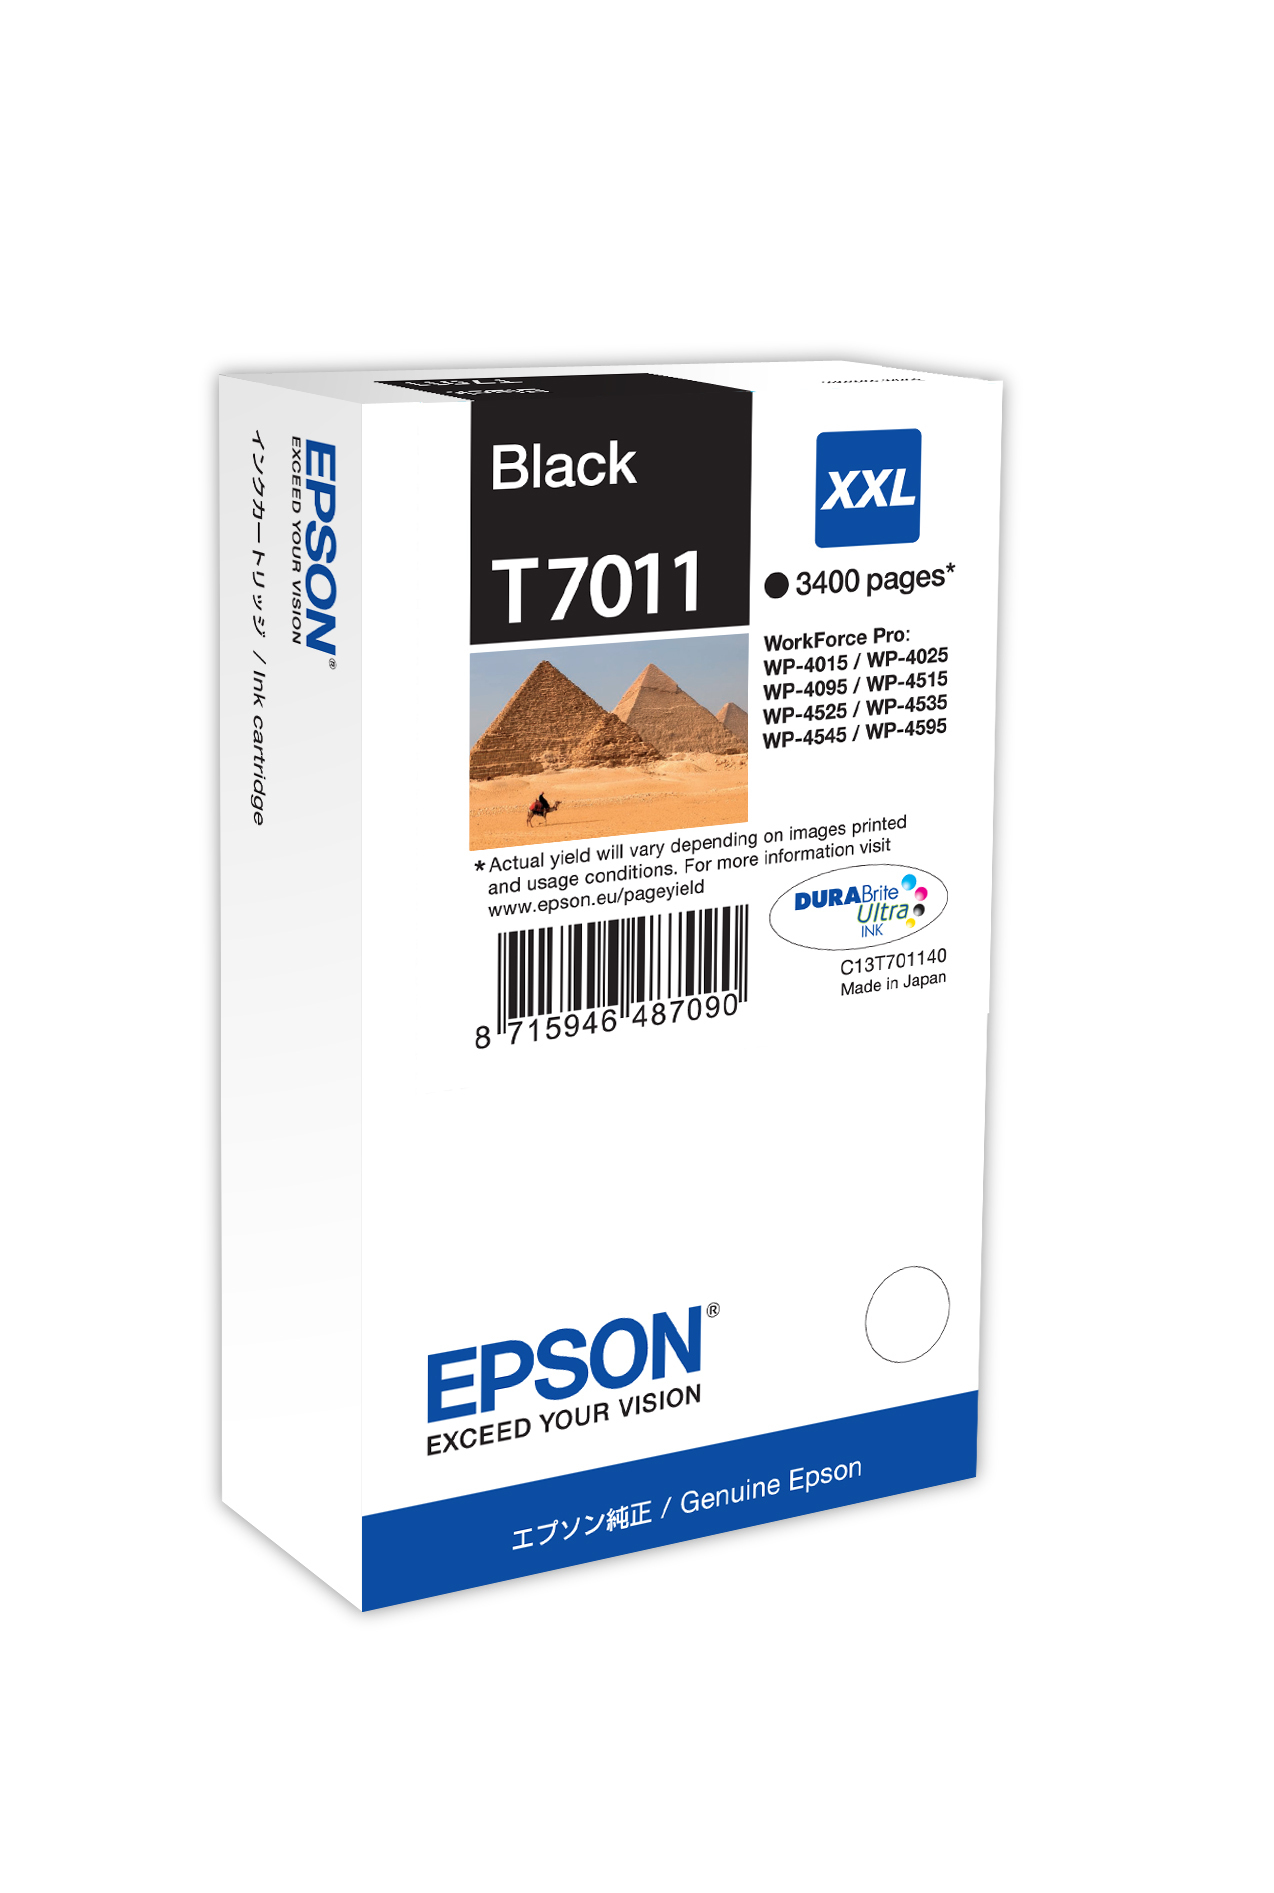 Epson Ink Cartridge XXL Black 3.4k